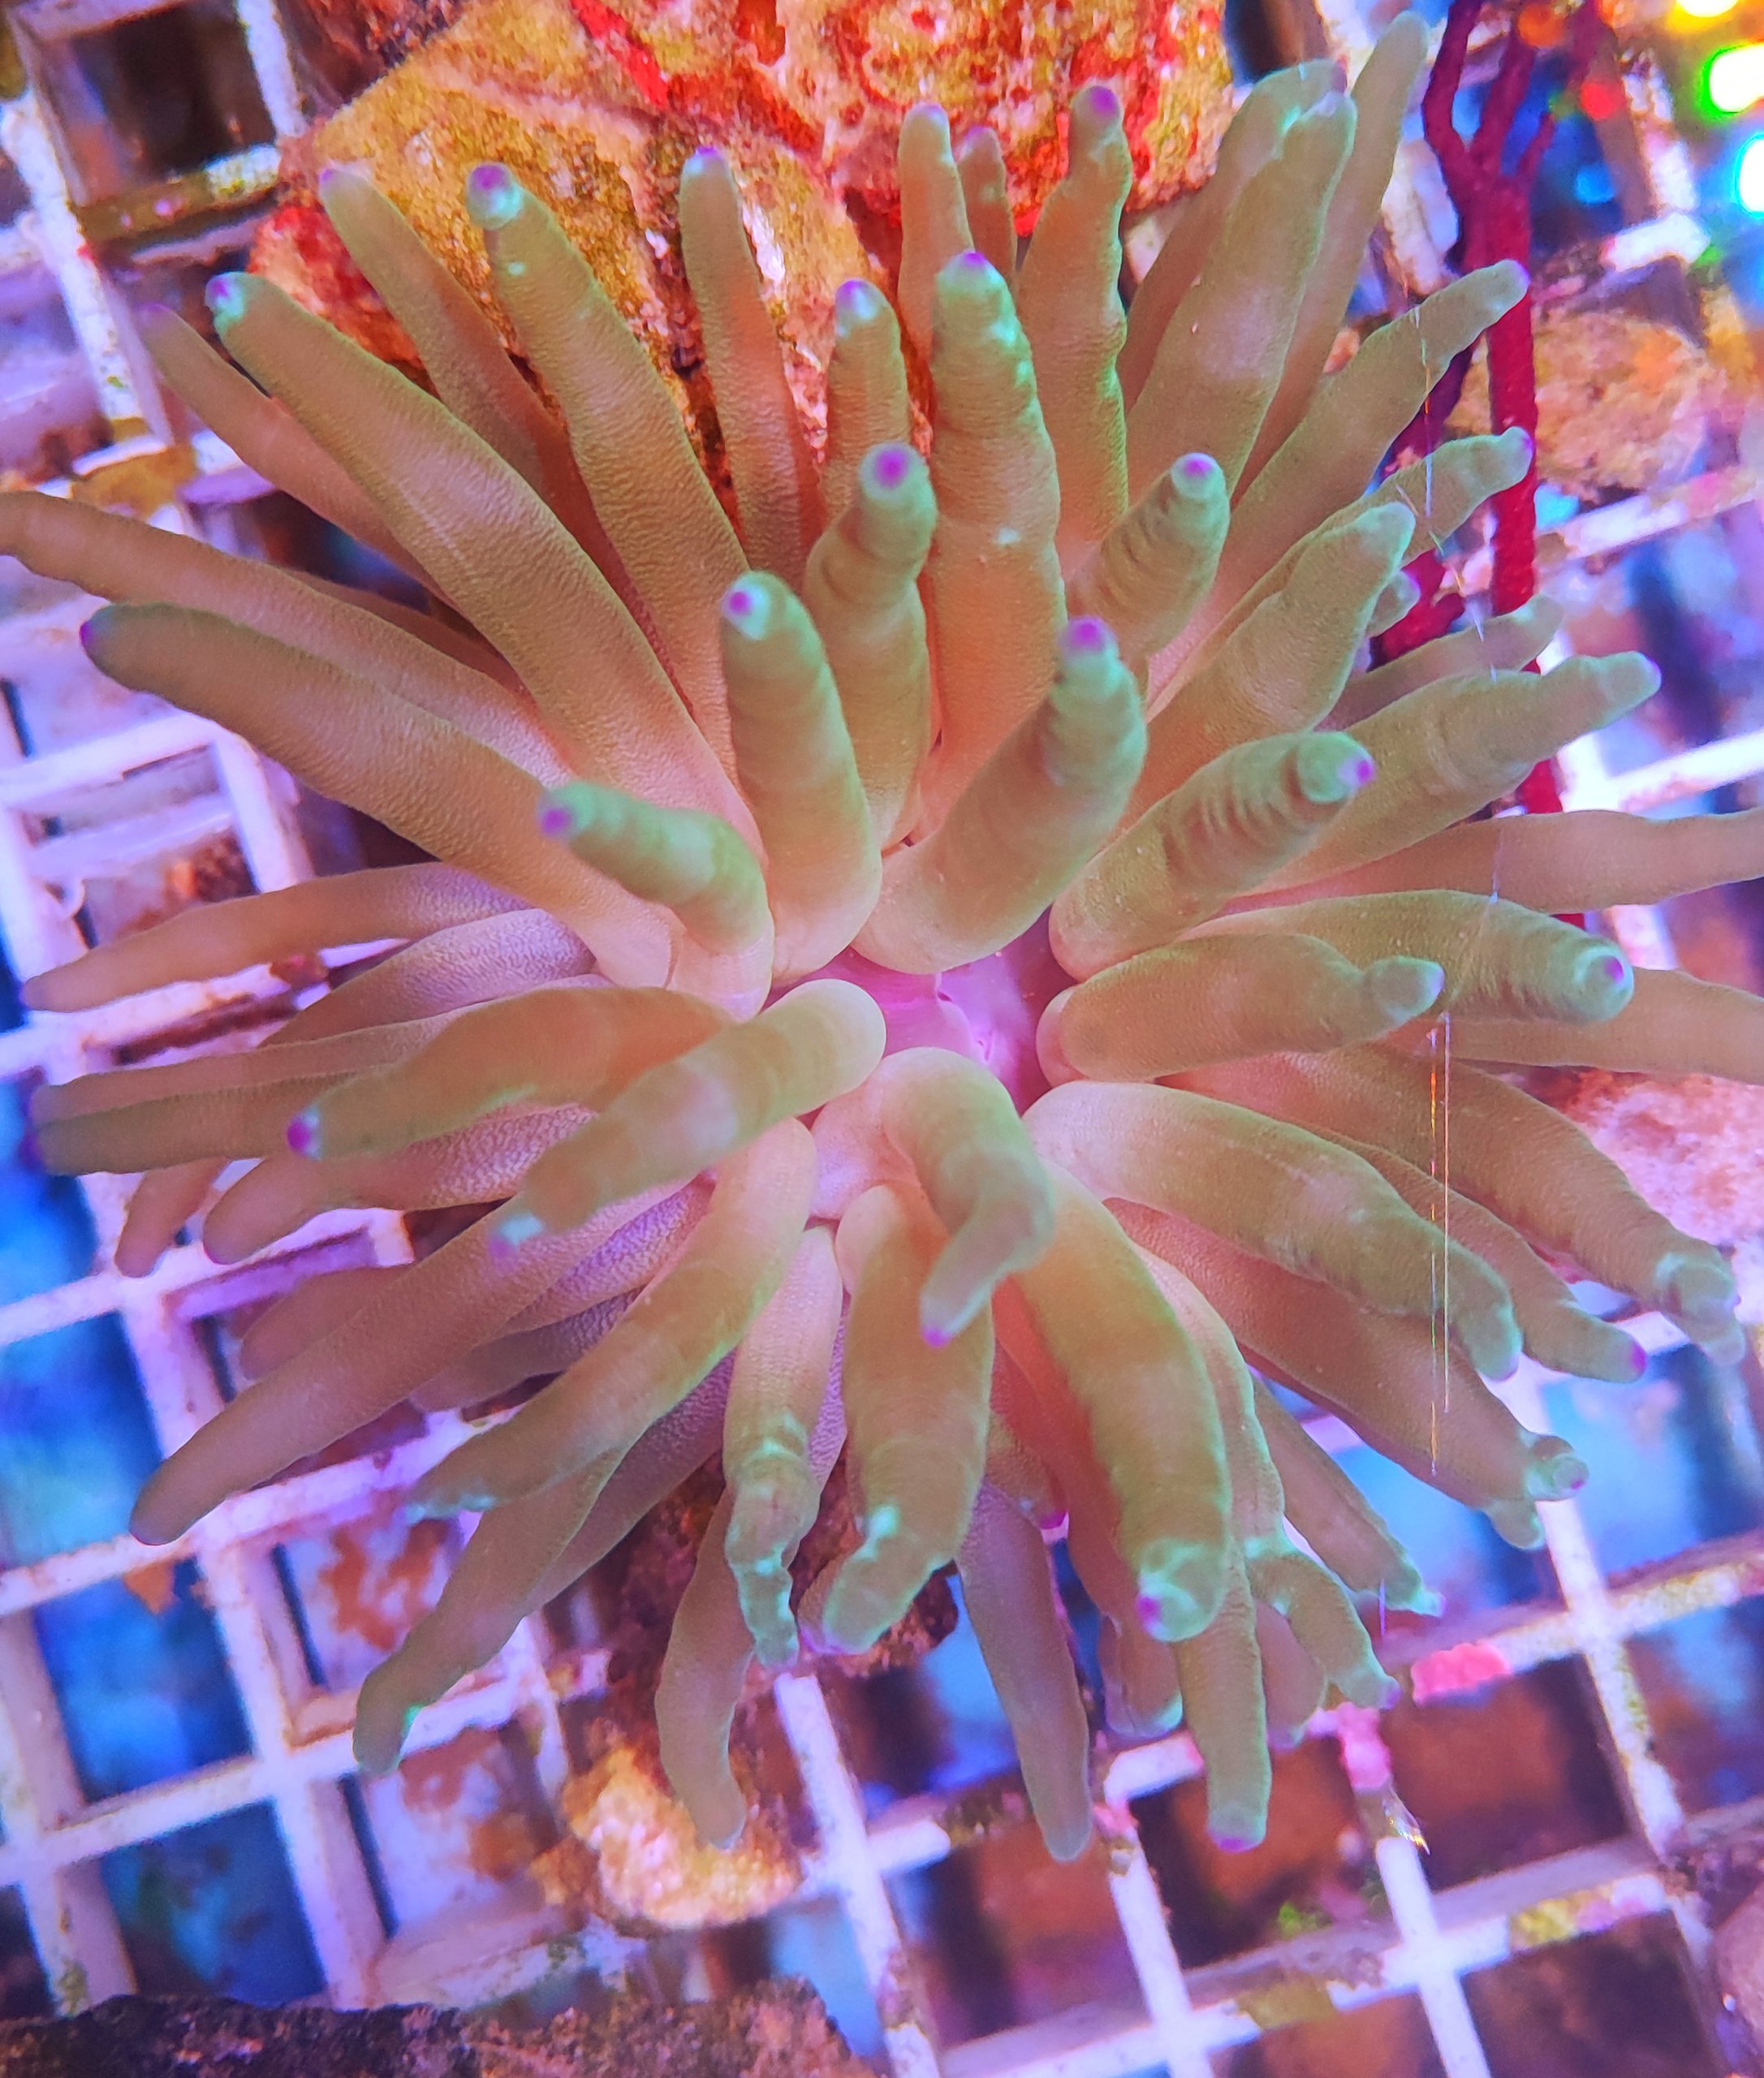 Blasenanemone – Entacmaea quadricolor sunburst